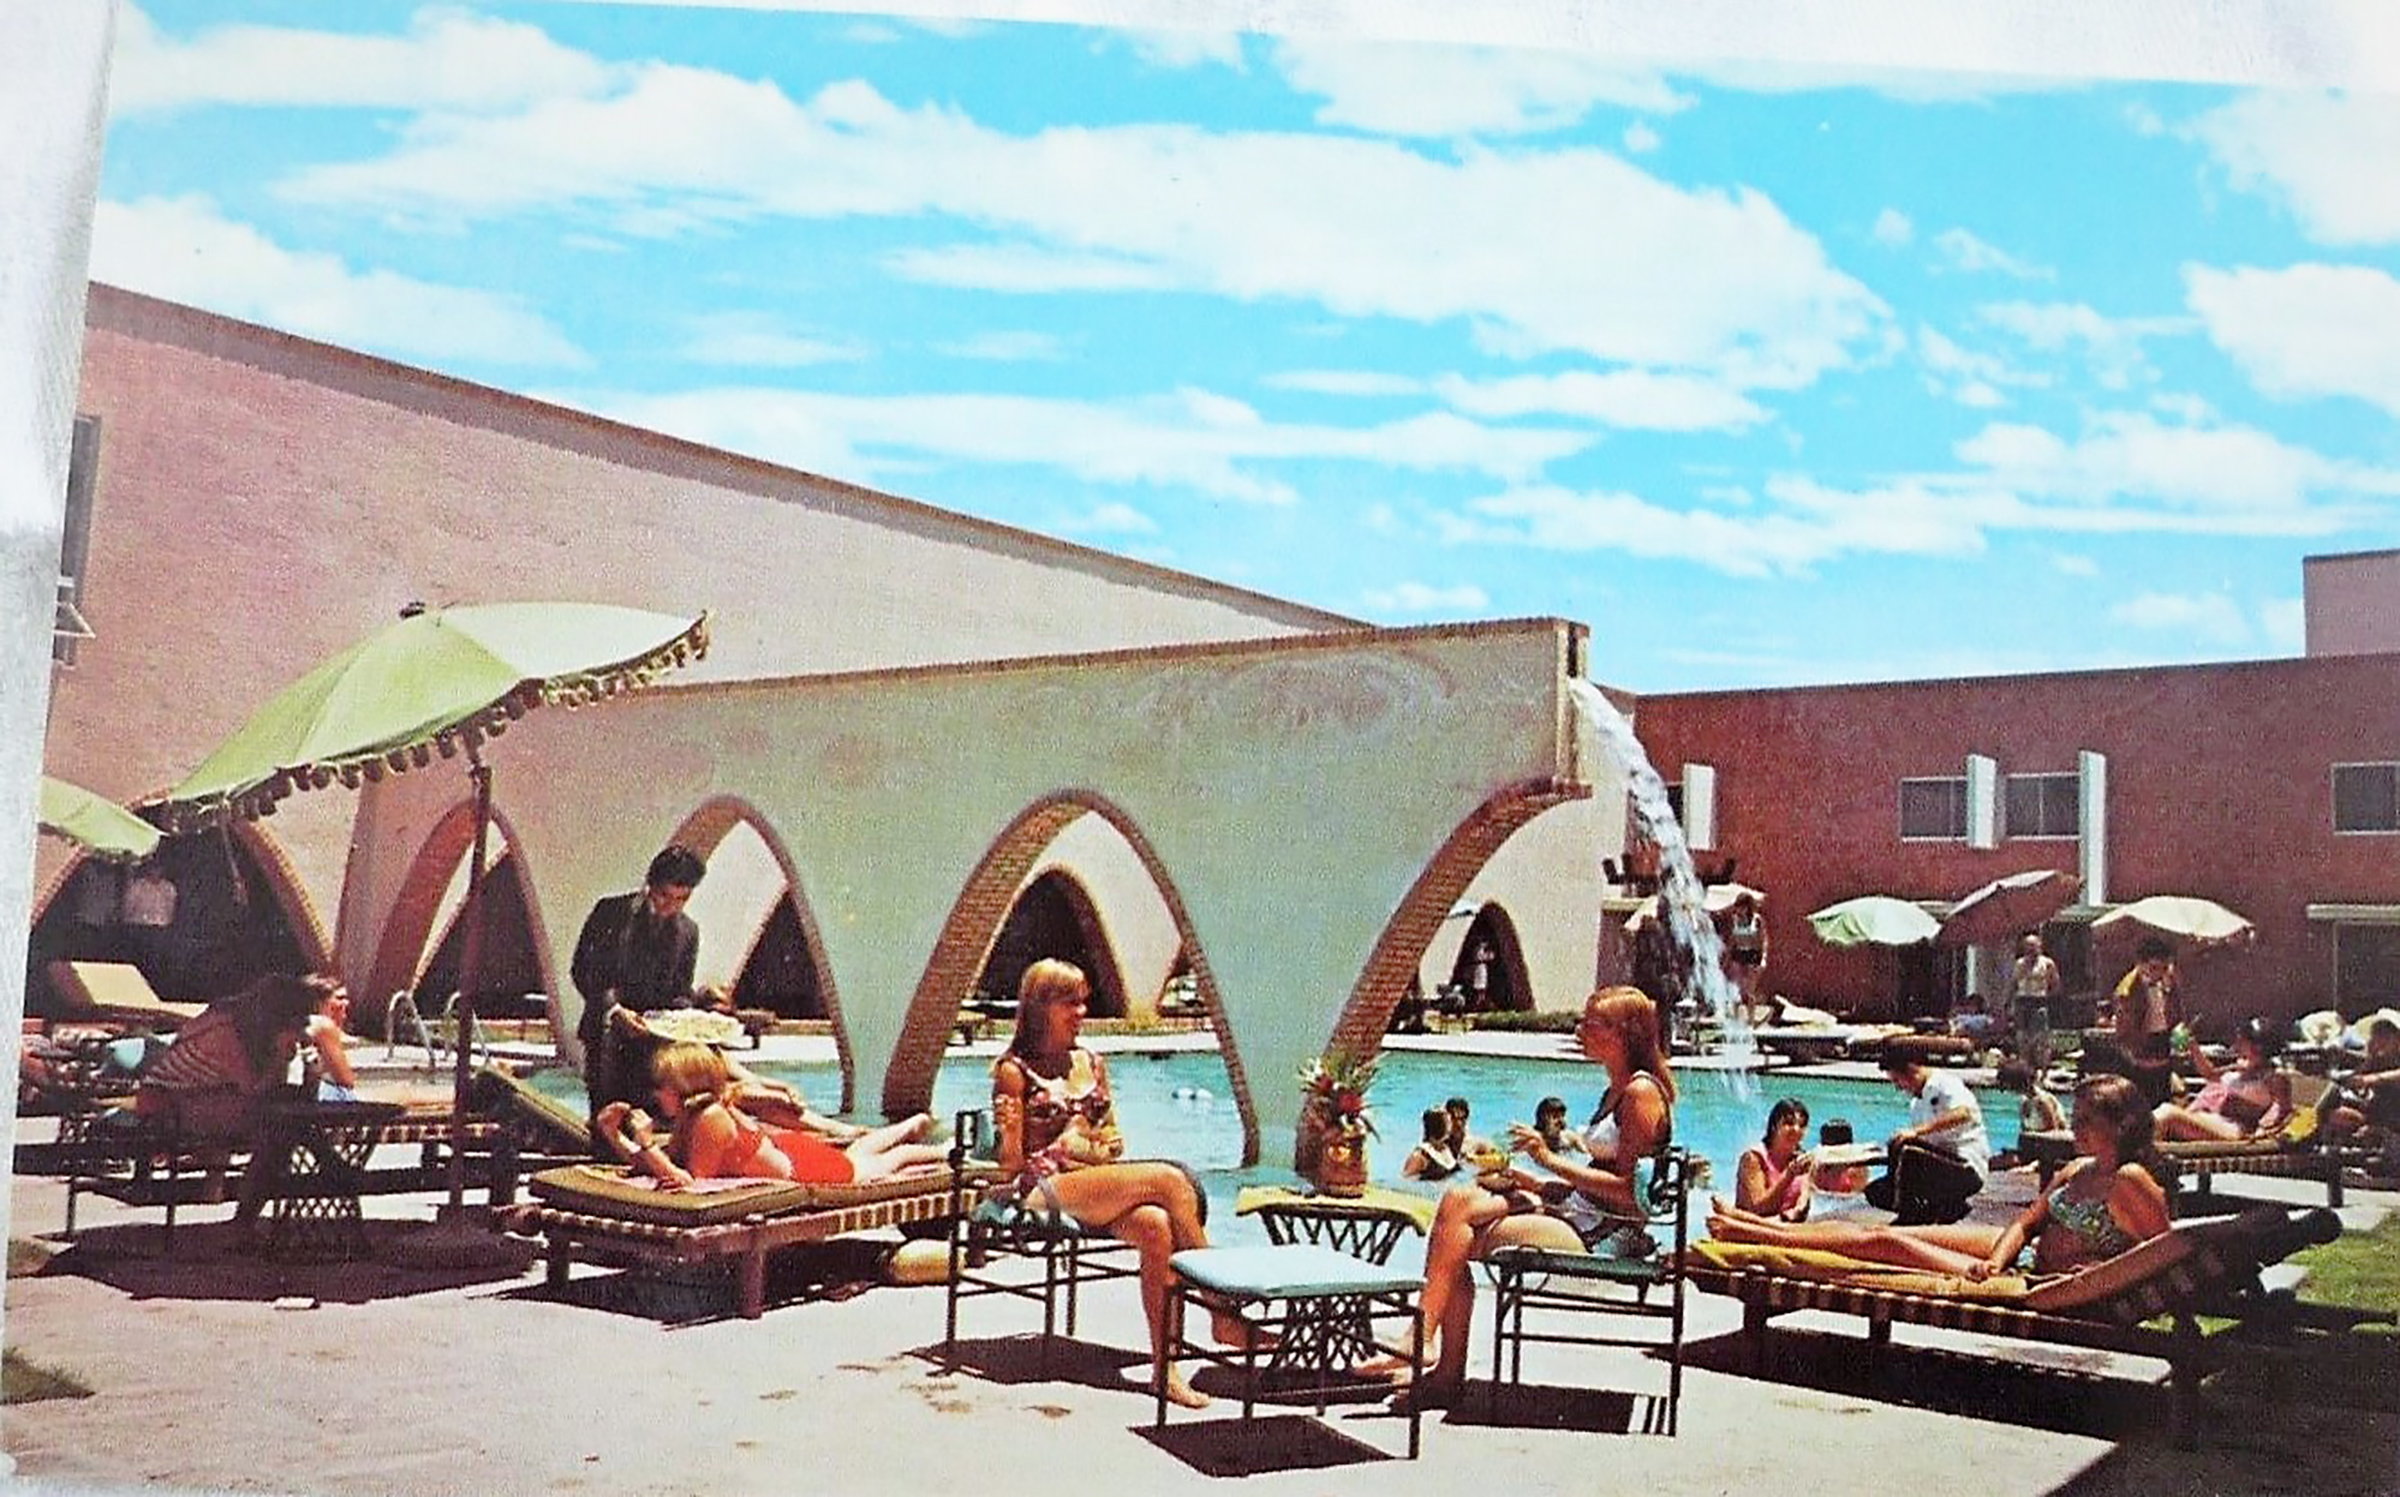 1960s-era Mexican tourism ad